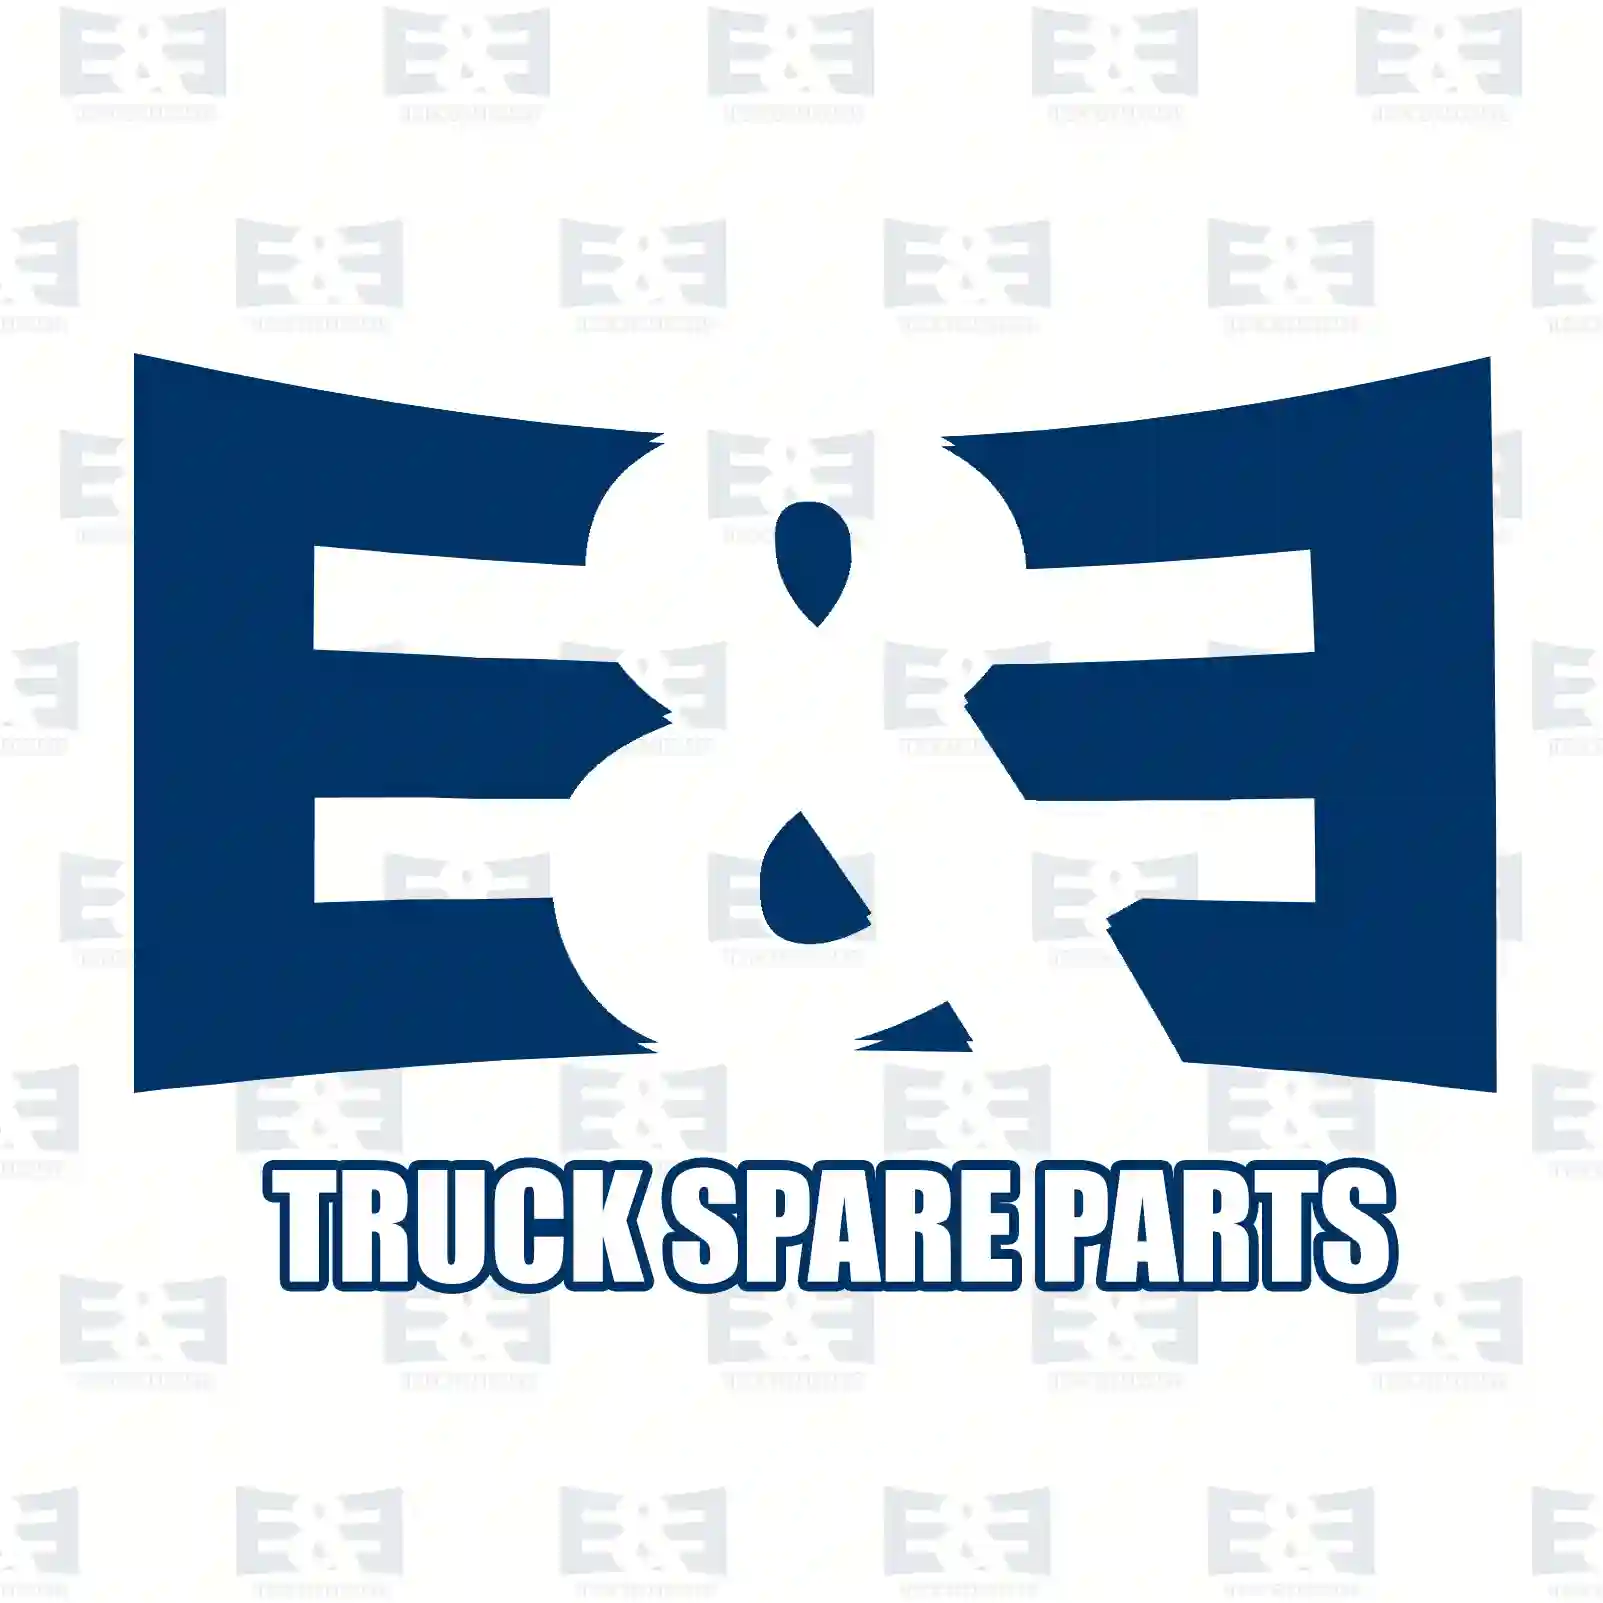 Ball joint, left hand thread, 2E2278073, 0009960445, 0009965145, 0009965645, 0009967645, 0019963145, 3849960245, ZG40136-0008 ||  2E2278073 E&E Truck Spare Parts | Truck Spare Parts, Auotomotive Spare Parts Ball joint, left hand thread, 2E2278073, 0009960445, 0009965145, 0009965645, 0009967645, 0019963145, 3849960245, ZG40136-0008 ||  2E2278073 E&E Truck Spare Parts | Truck Spare Parts, Auotomotive Spare Parts